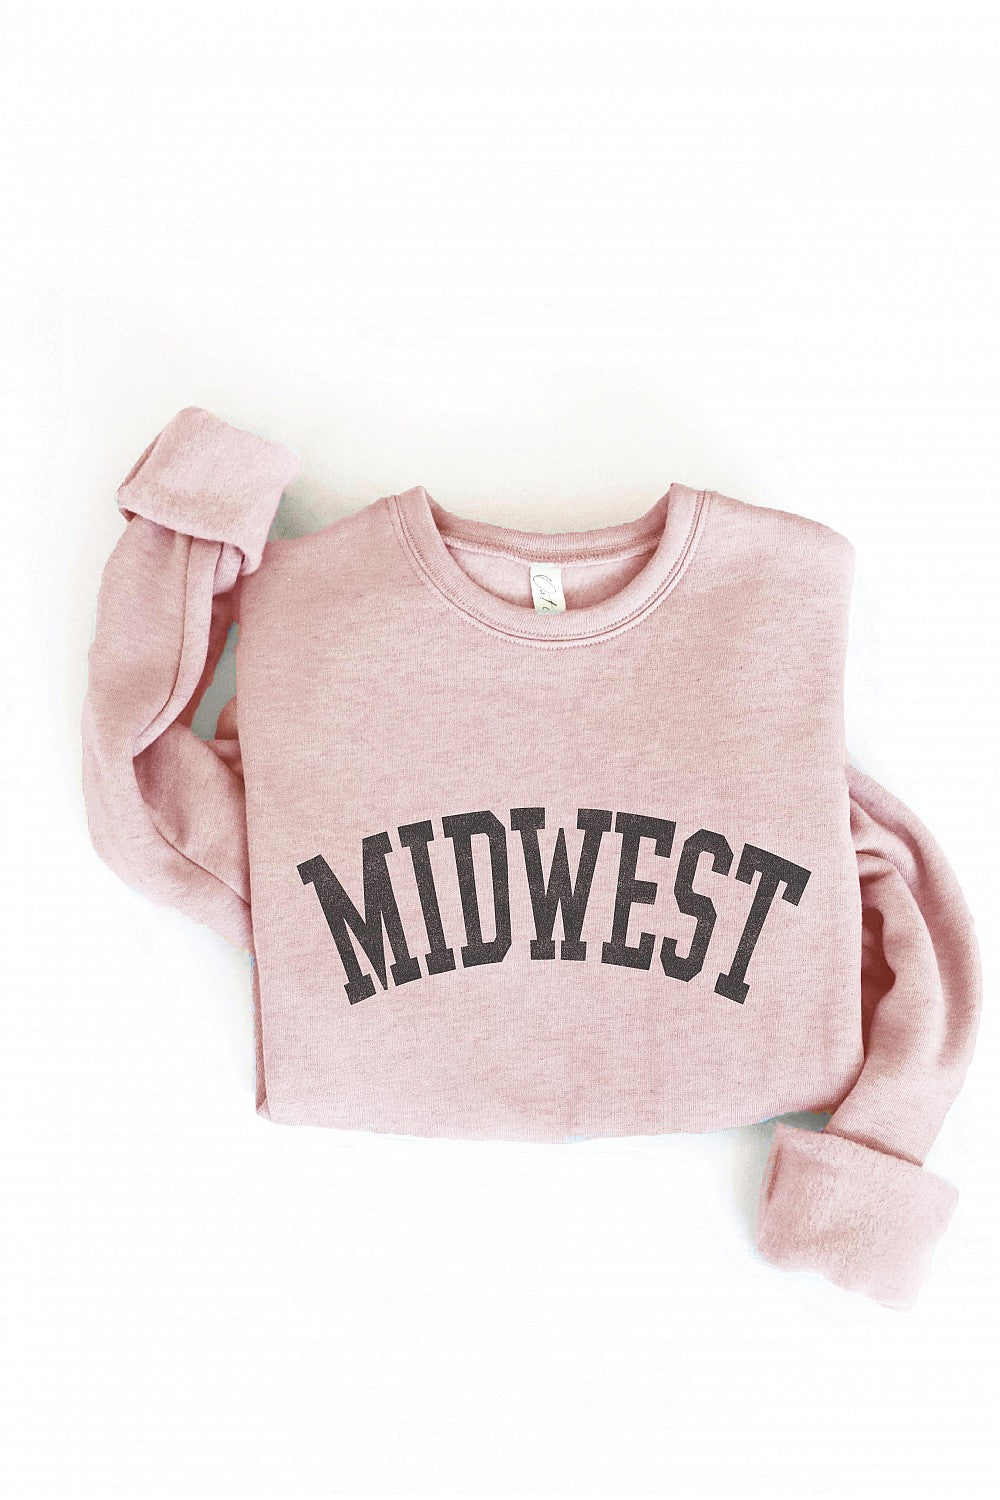 Midwest Graphic Fleece Sweatshirt